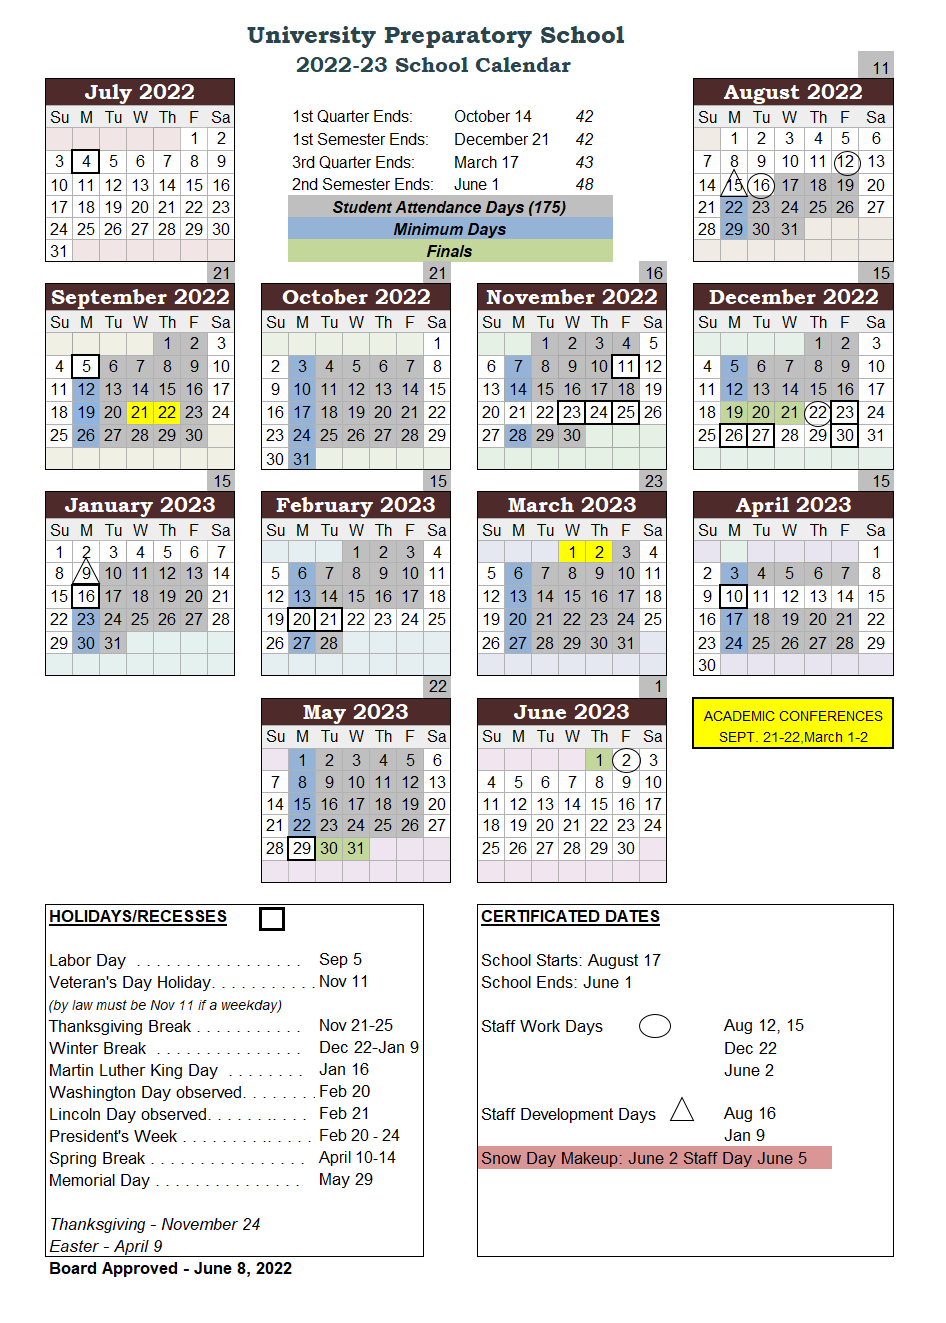 U-Prep 2021-22 Academic Calendar